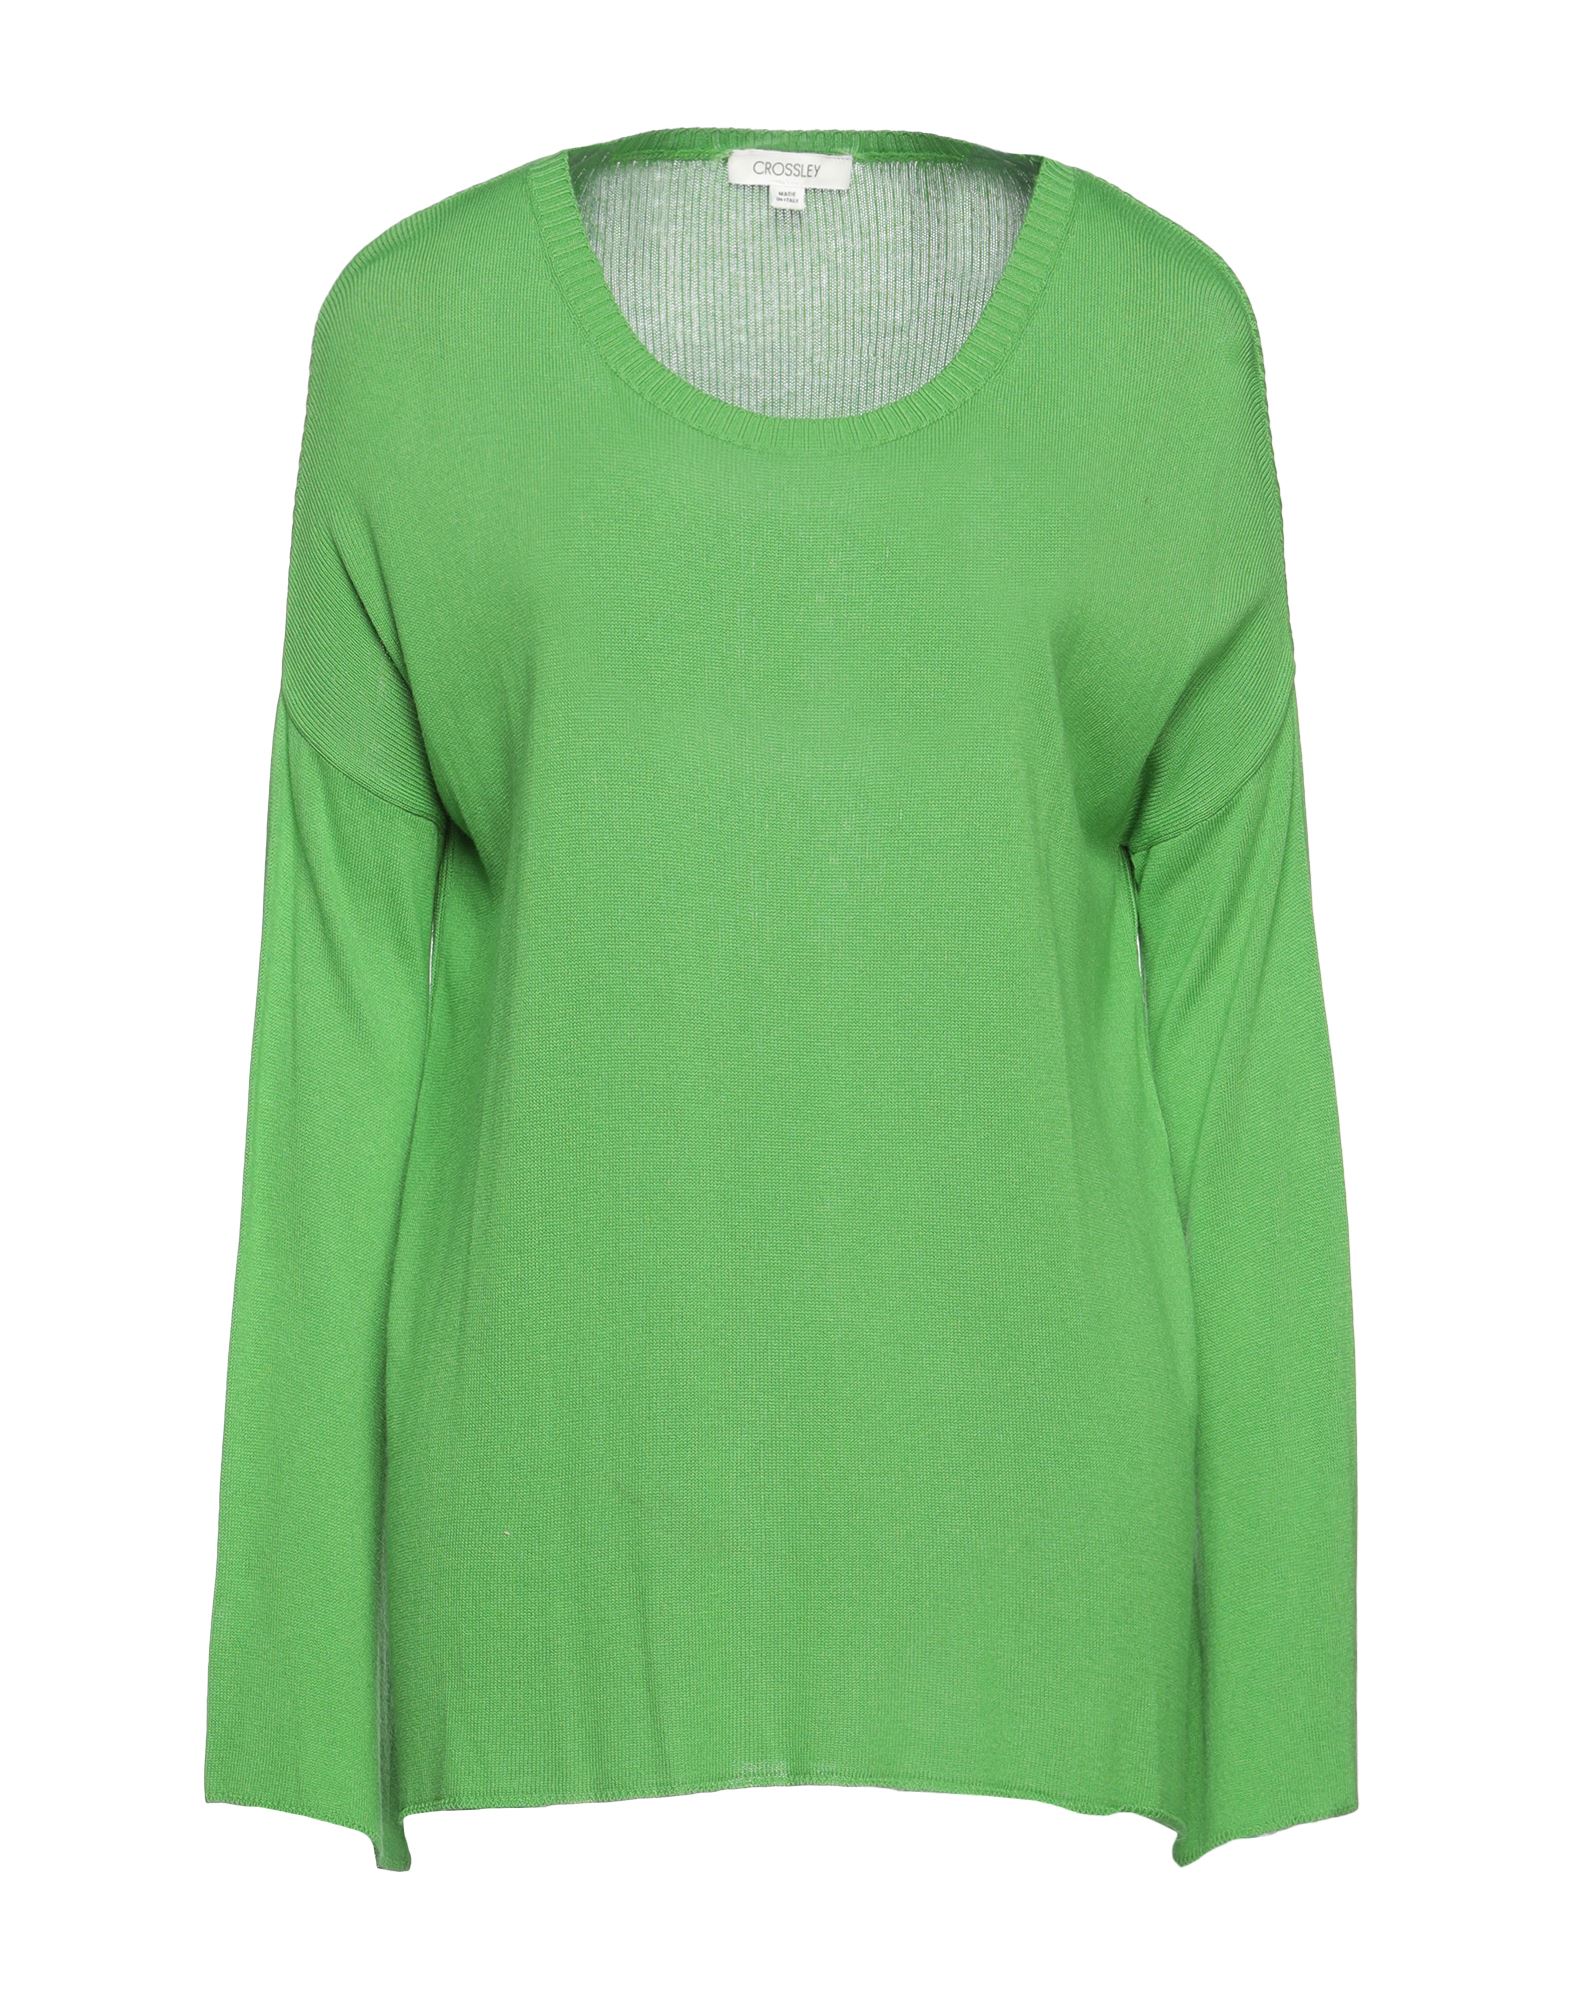 CROSSLEY Pullover Damen Grün von CROSSLEY